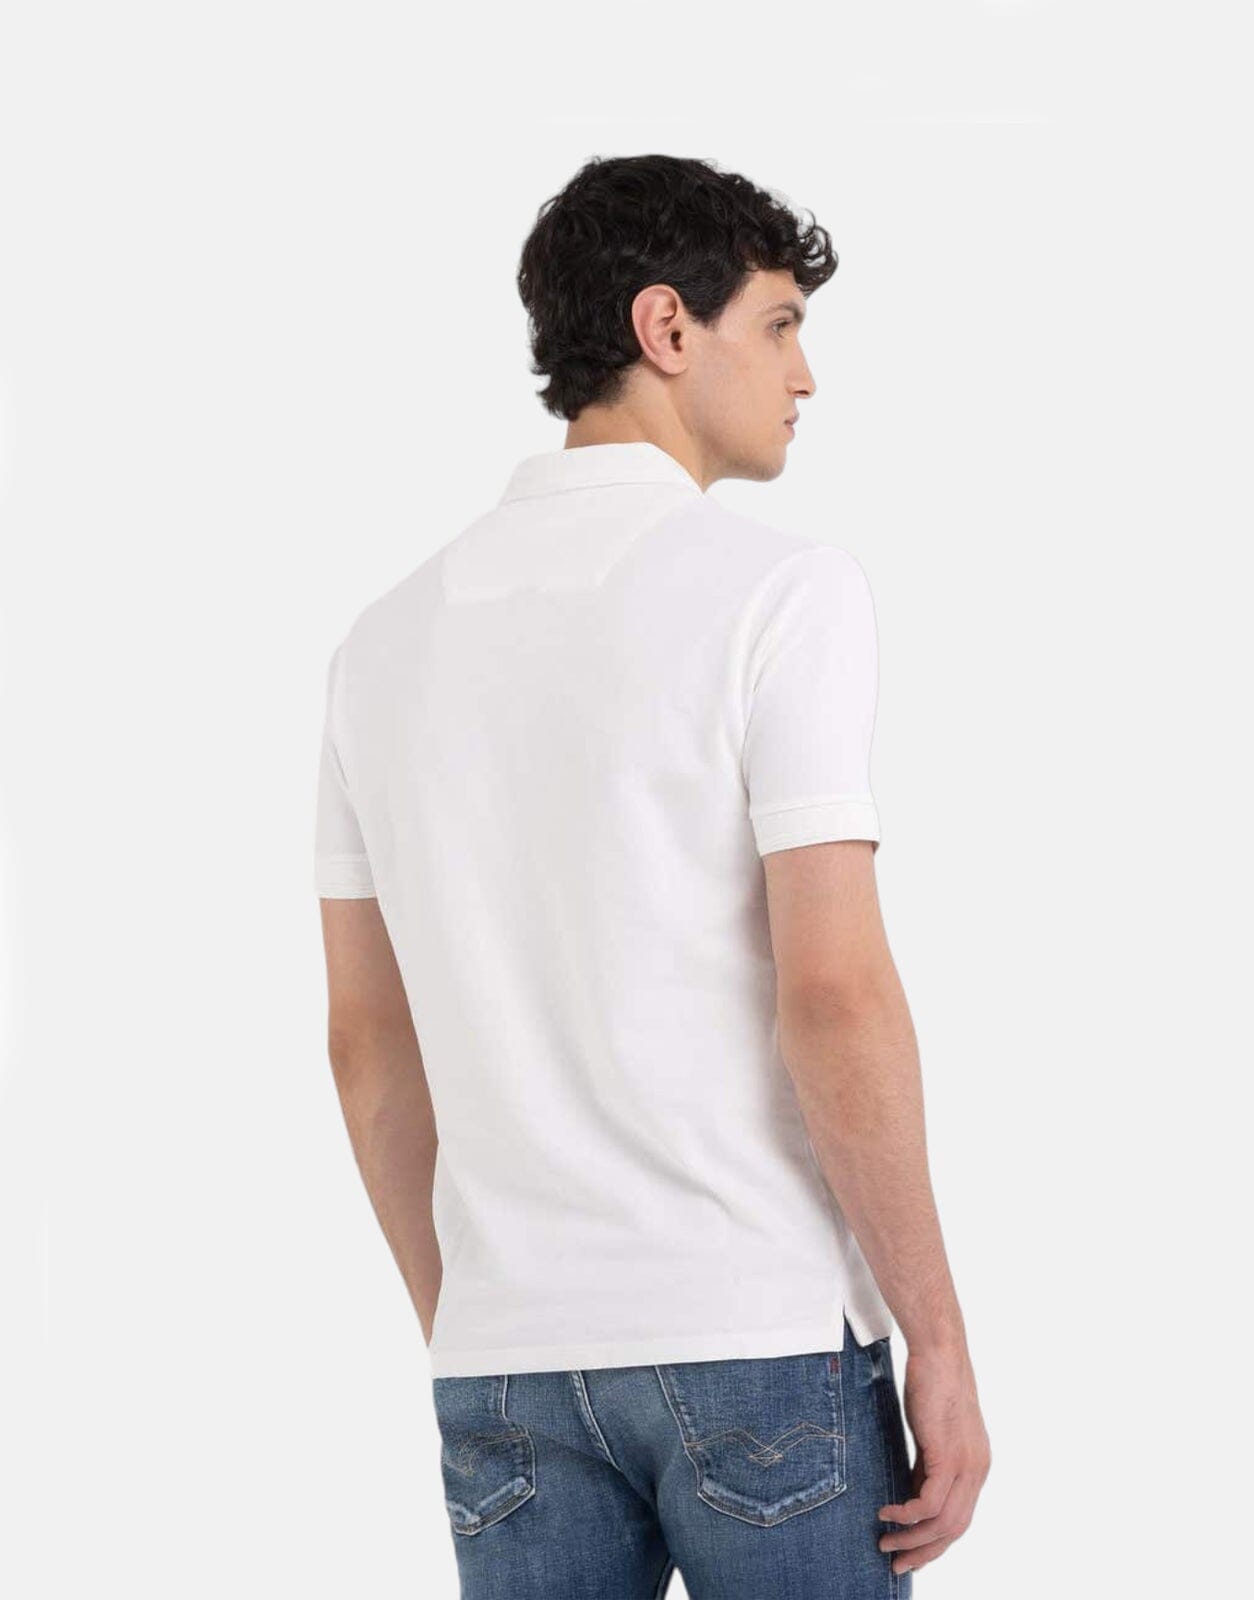 Replay Piqué White Polo Shirt - Subwear